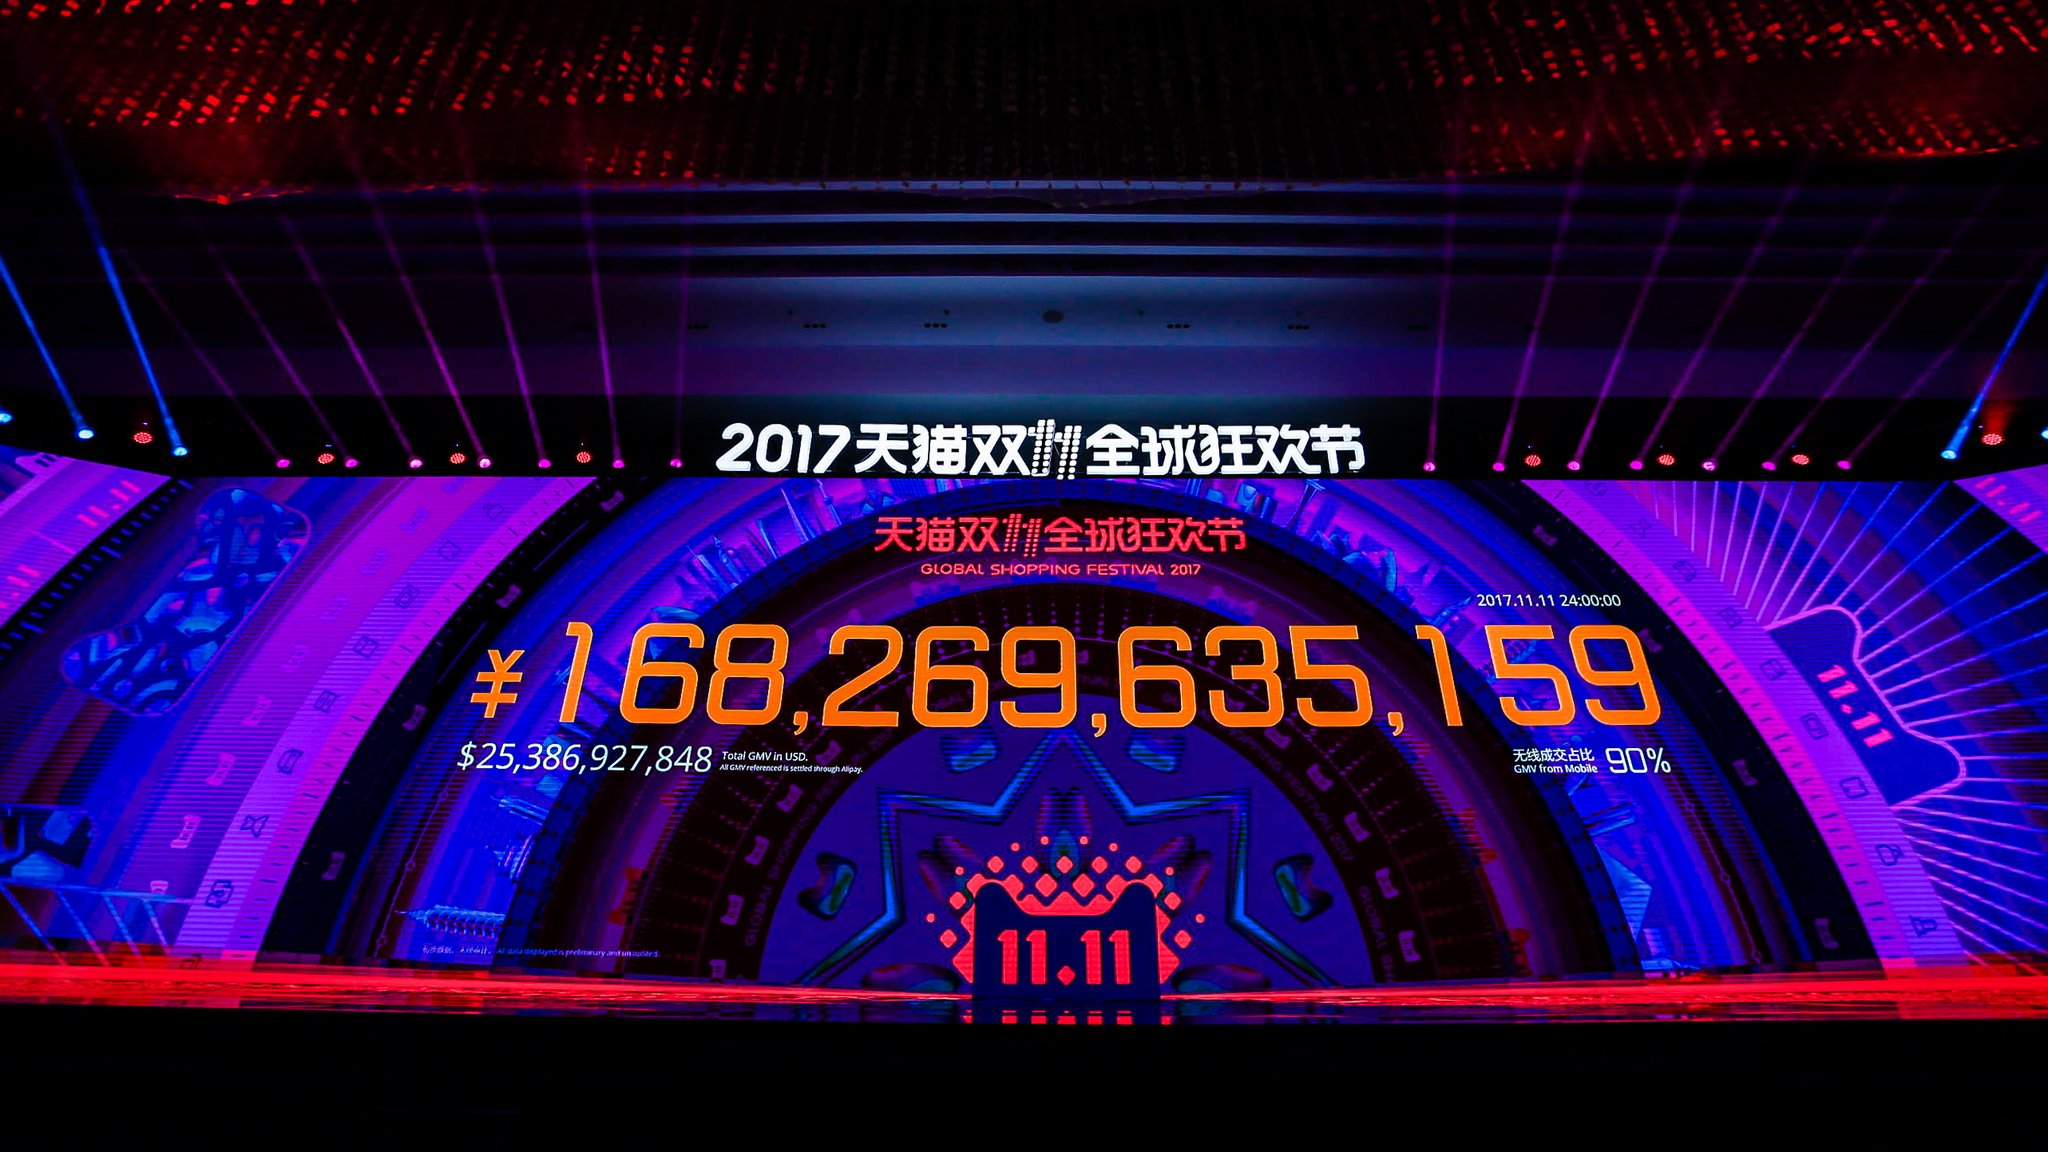 Single's Day 2017: USD 25.4 Milliarden GMV bei Alibaba